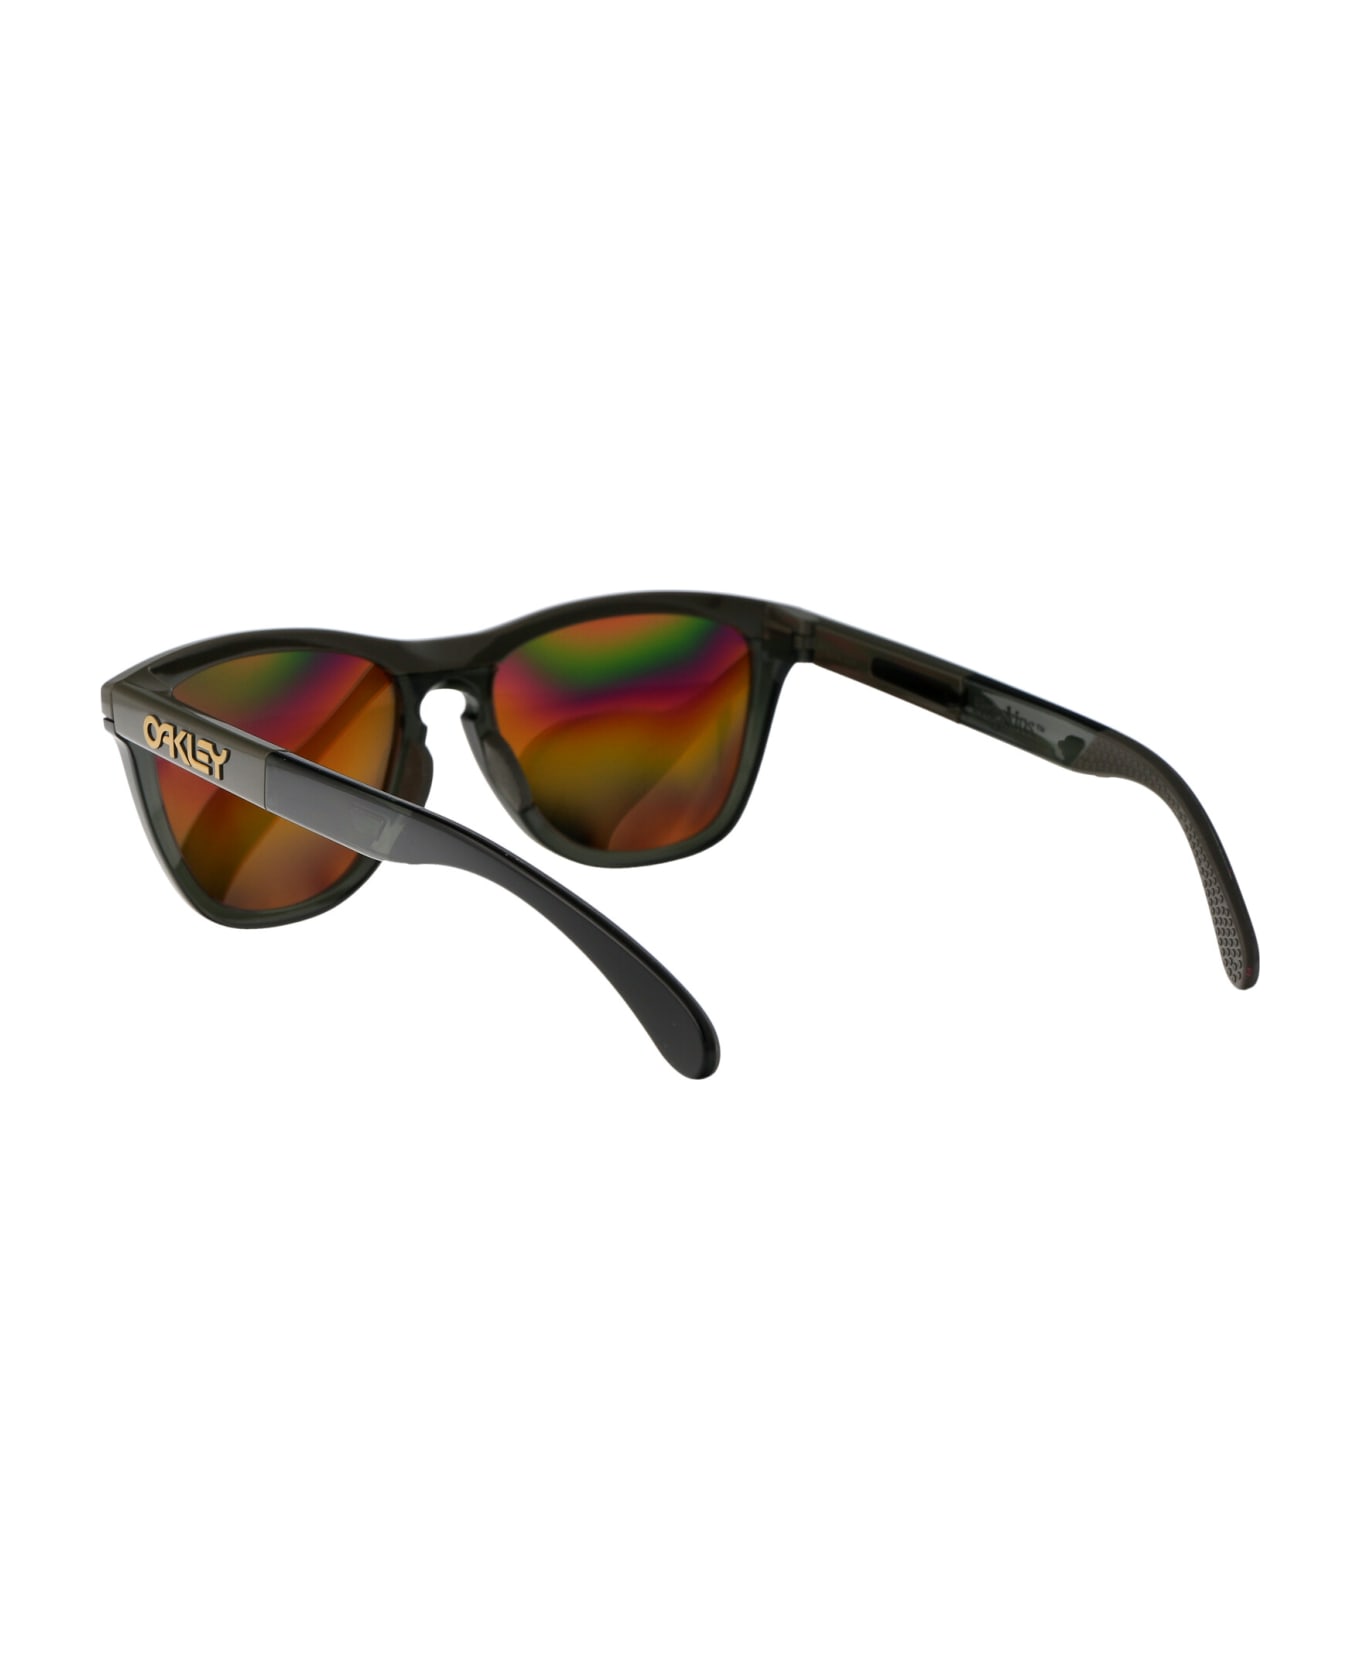 Oakley Frogskins Range Sunglasses - Black